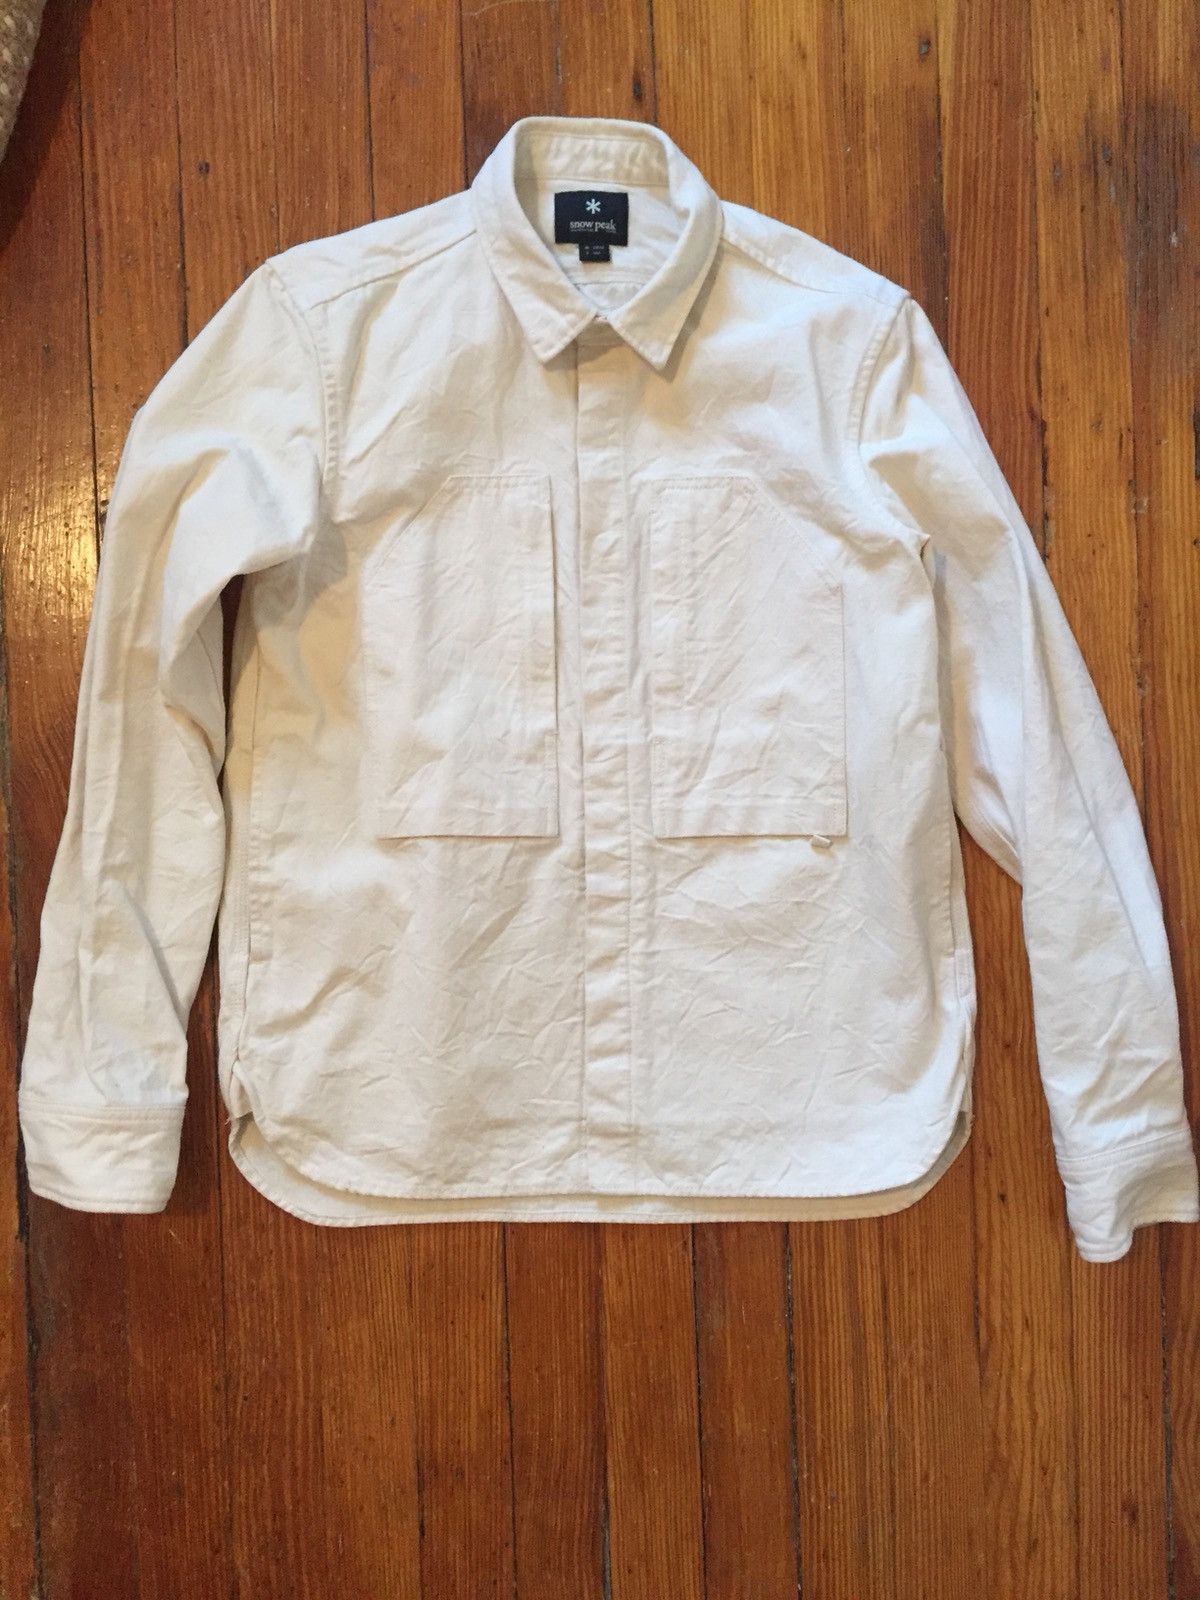 Snow Peak Okynawa Shirt Jacket | Grailed